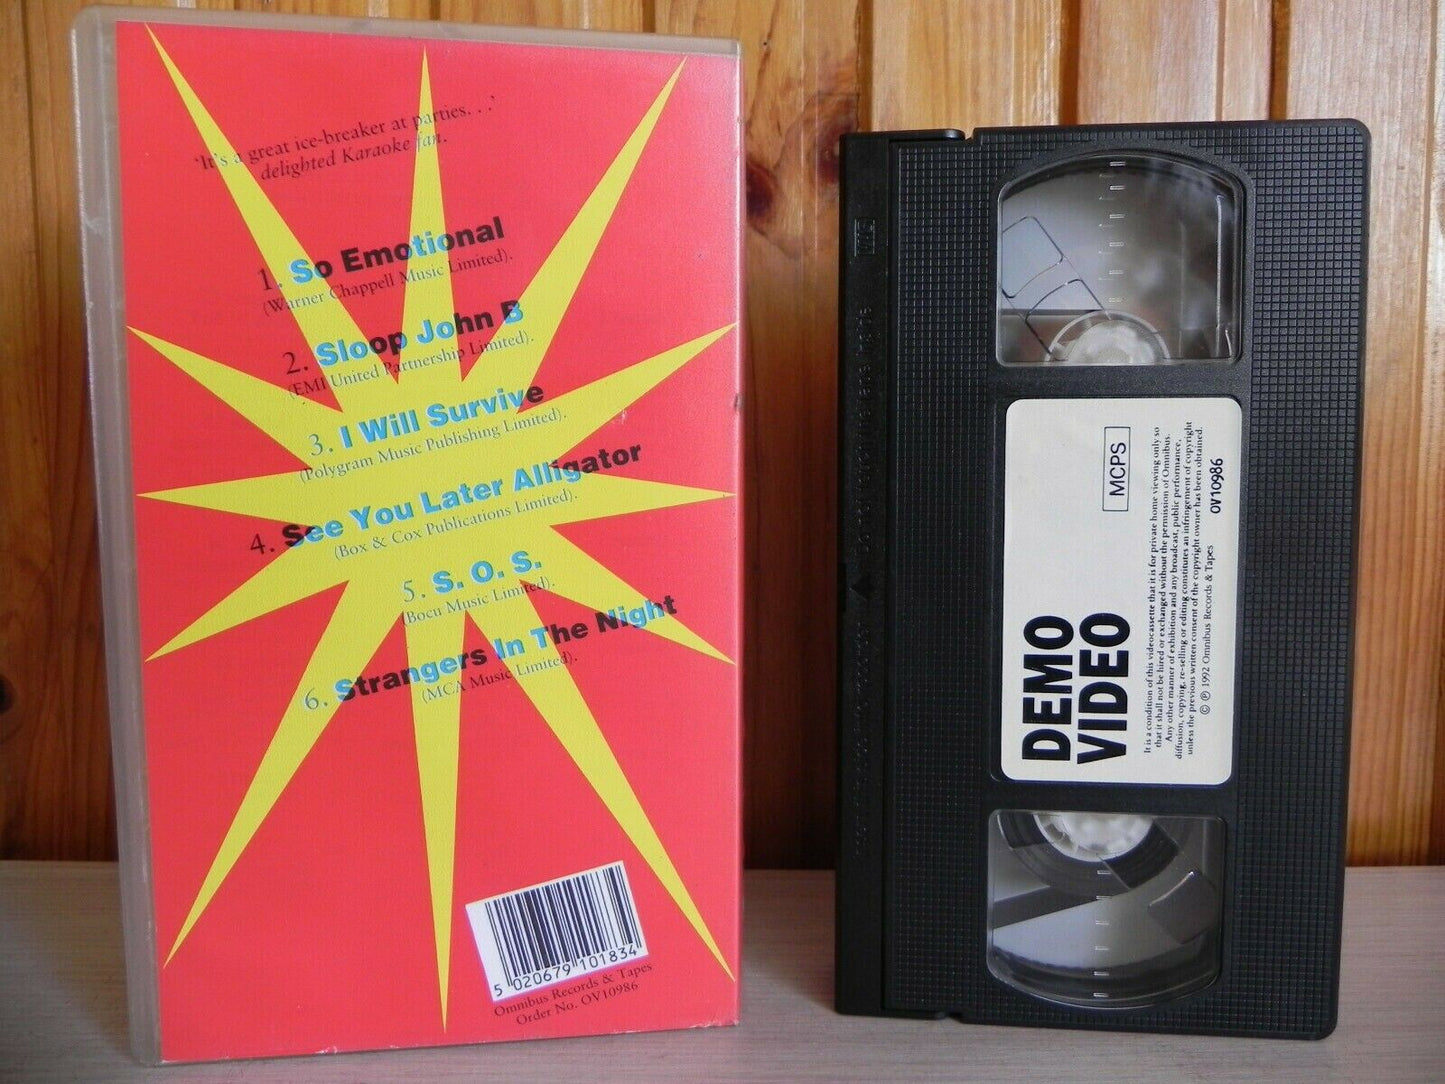 Karaoke Video! - Now, Karaoke Video Fun For Everyone - 6 Favourite Songs - VHS-